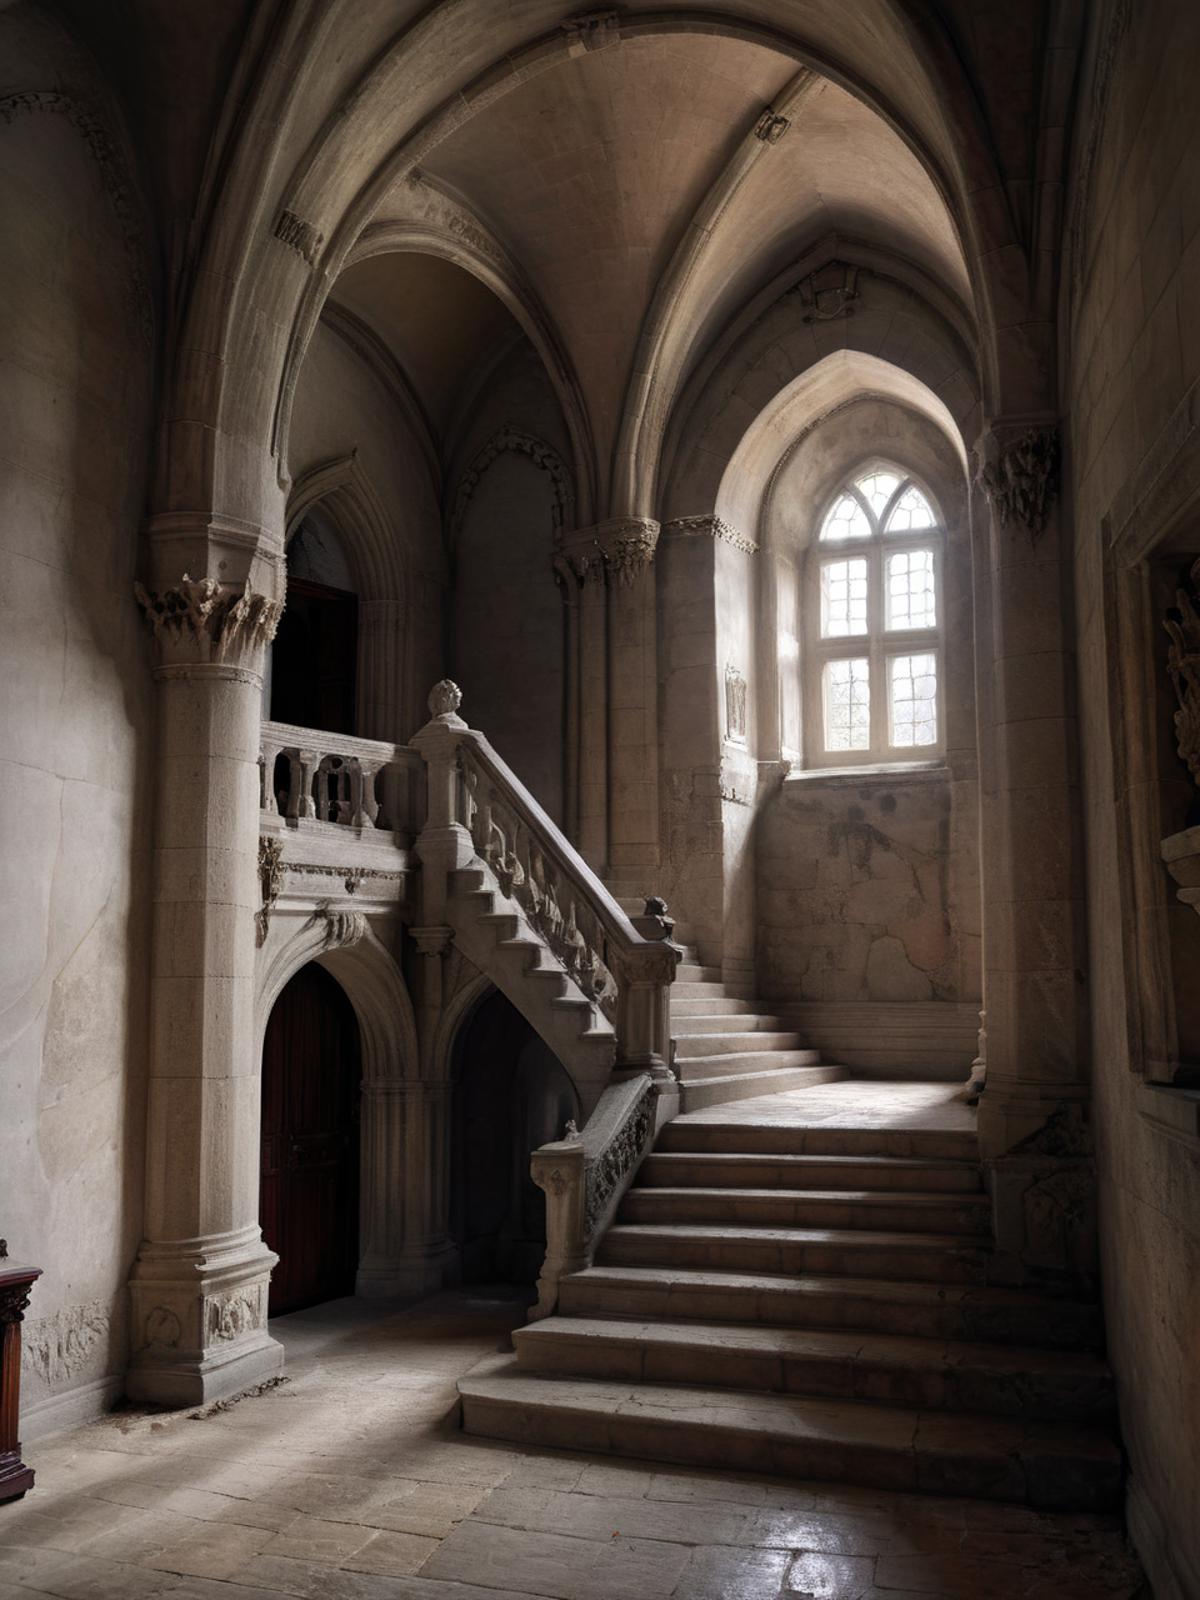 Castle_manor image by MarekLubomirovic